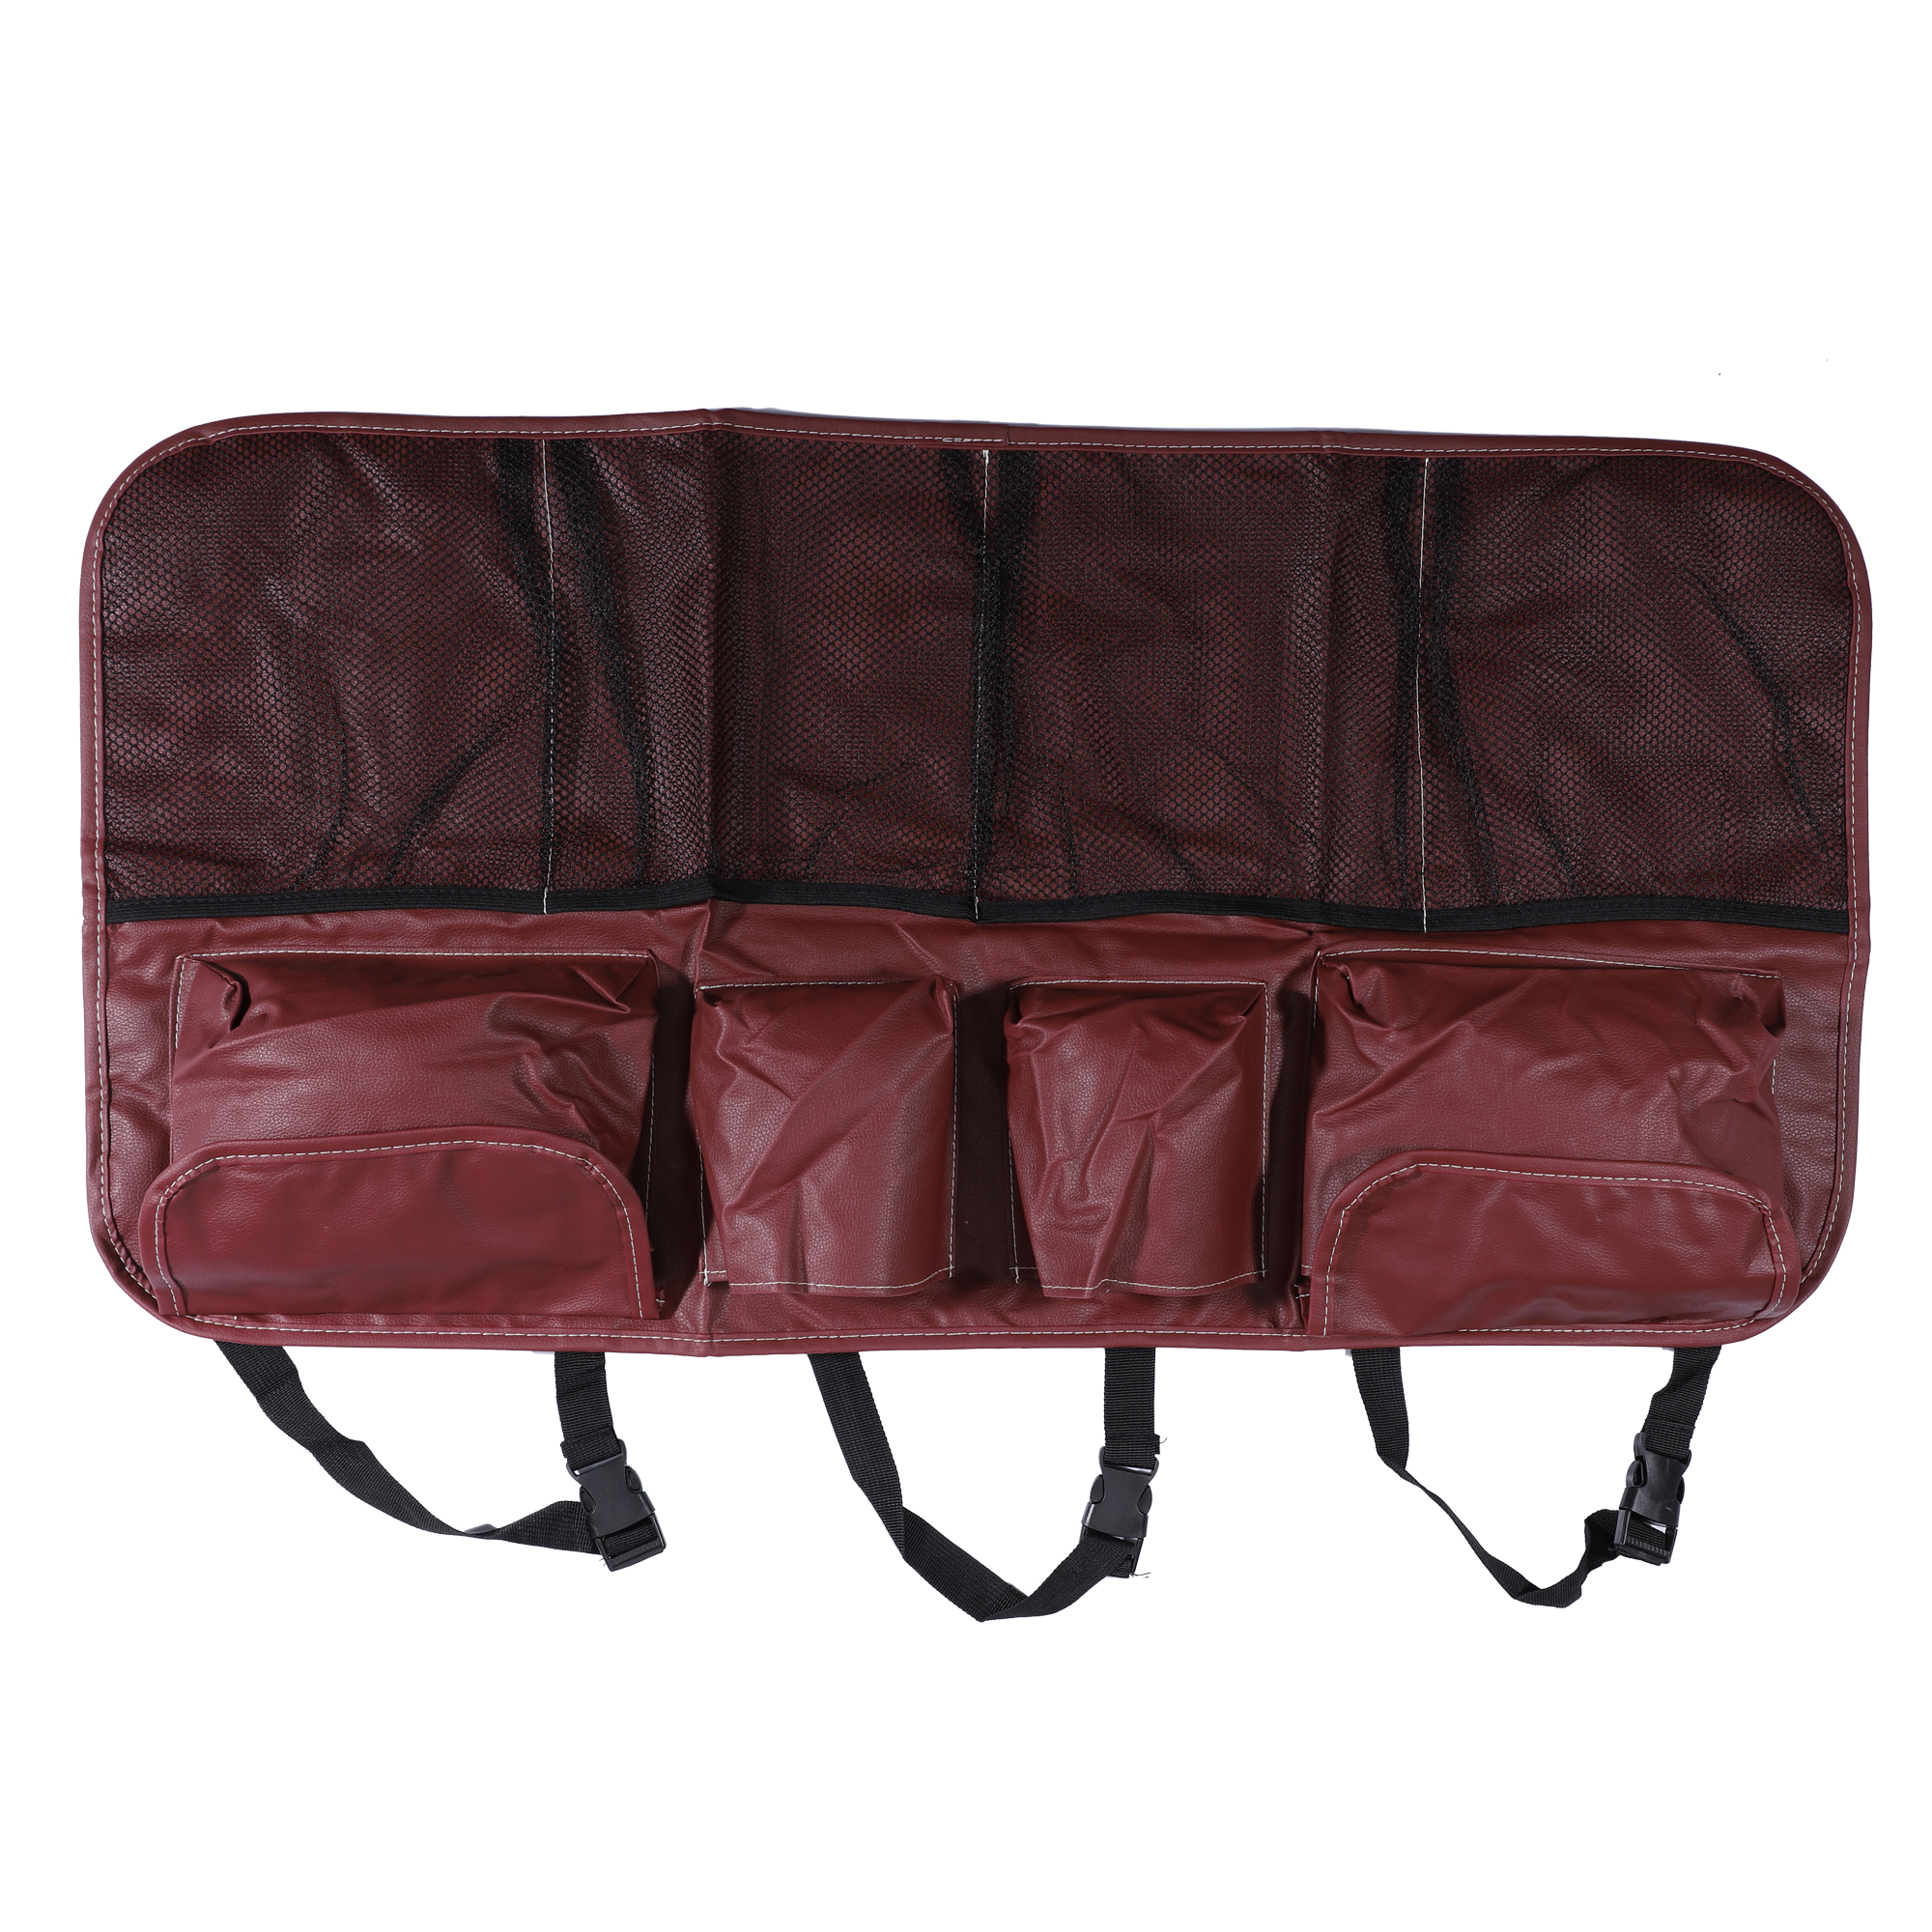 Unique Bargains Universal 88 x 48cm Car Seat Protector Organizer Interior Multi Pocket Storage Bag Faux Leather Red - image 1 of 6